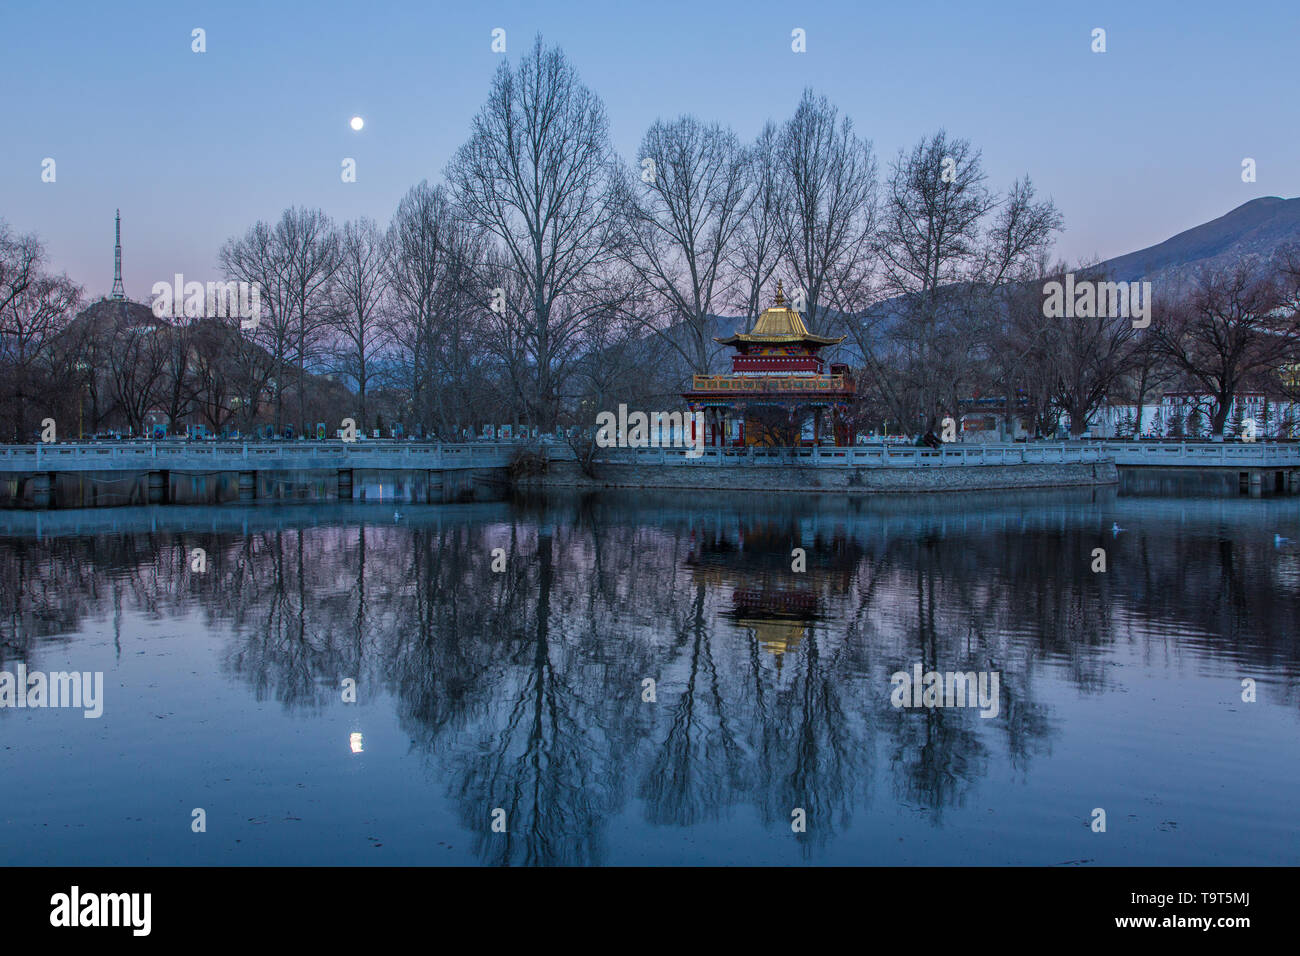 Una imagen del amanecer moonset sobre una pequeña pagoda en el lago en la Plaza del Potala en Lhasa, Tibet. Foto de stock